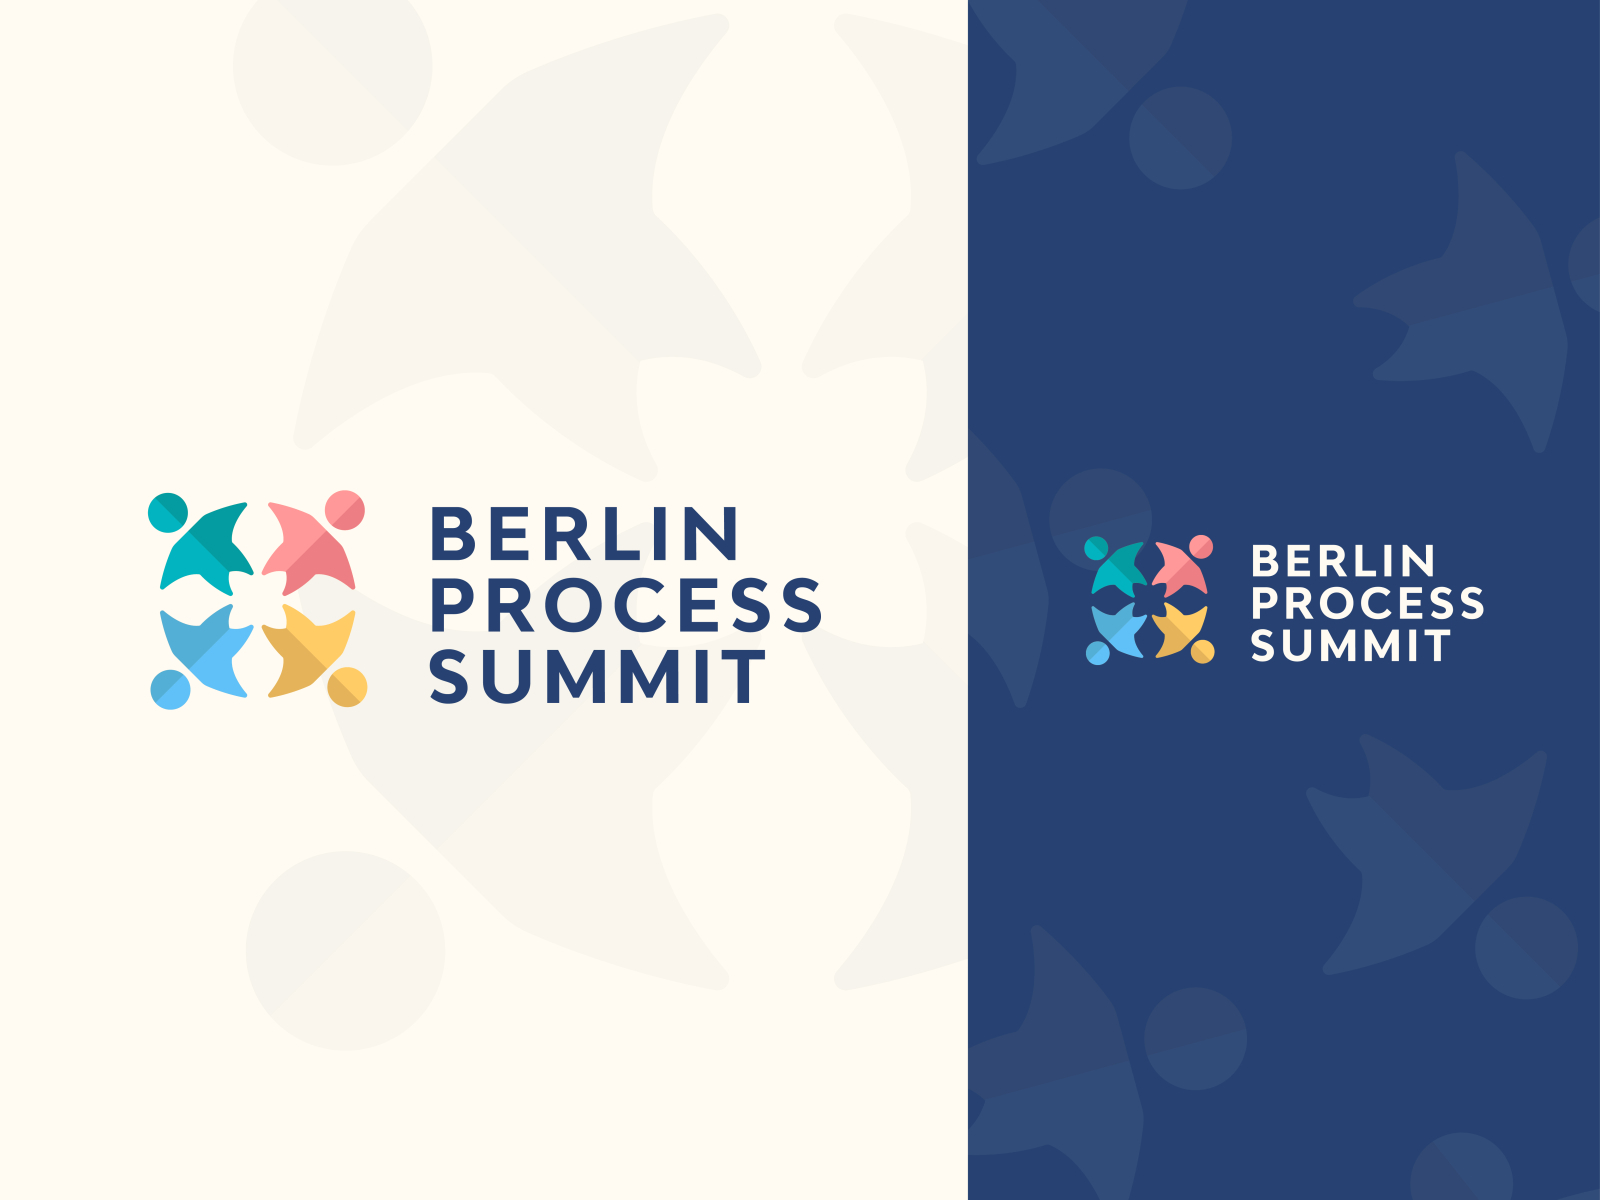 Berlin Process Summit Logo Concept by Enxh Shehi on Dribbble